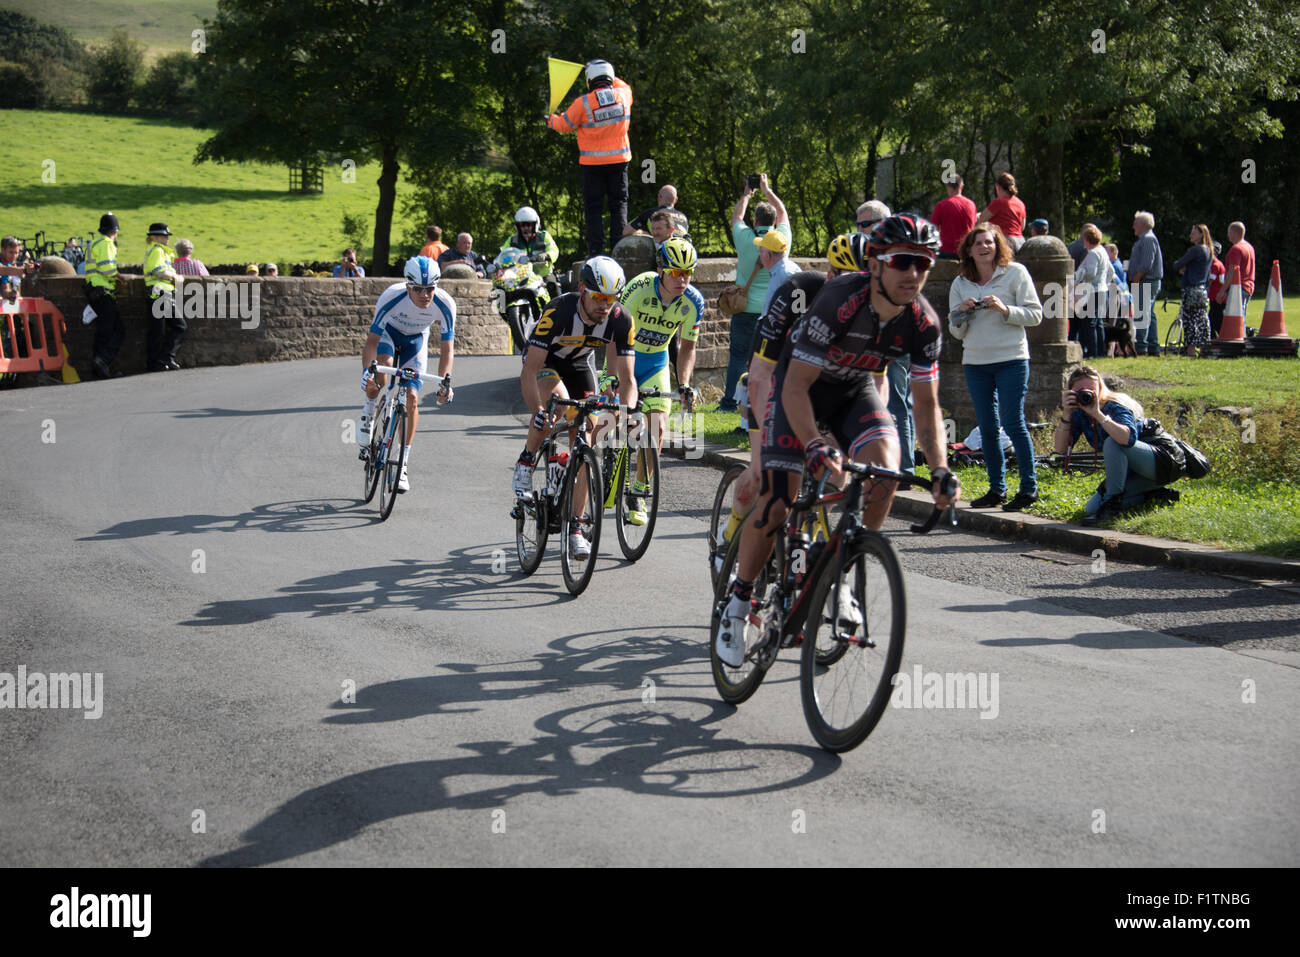 Stage 2 Aviva Tour of Britain cycle race in Downham village, Lancashire. Stock Photo